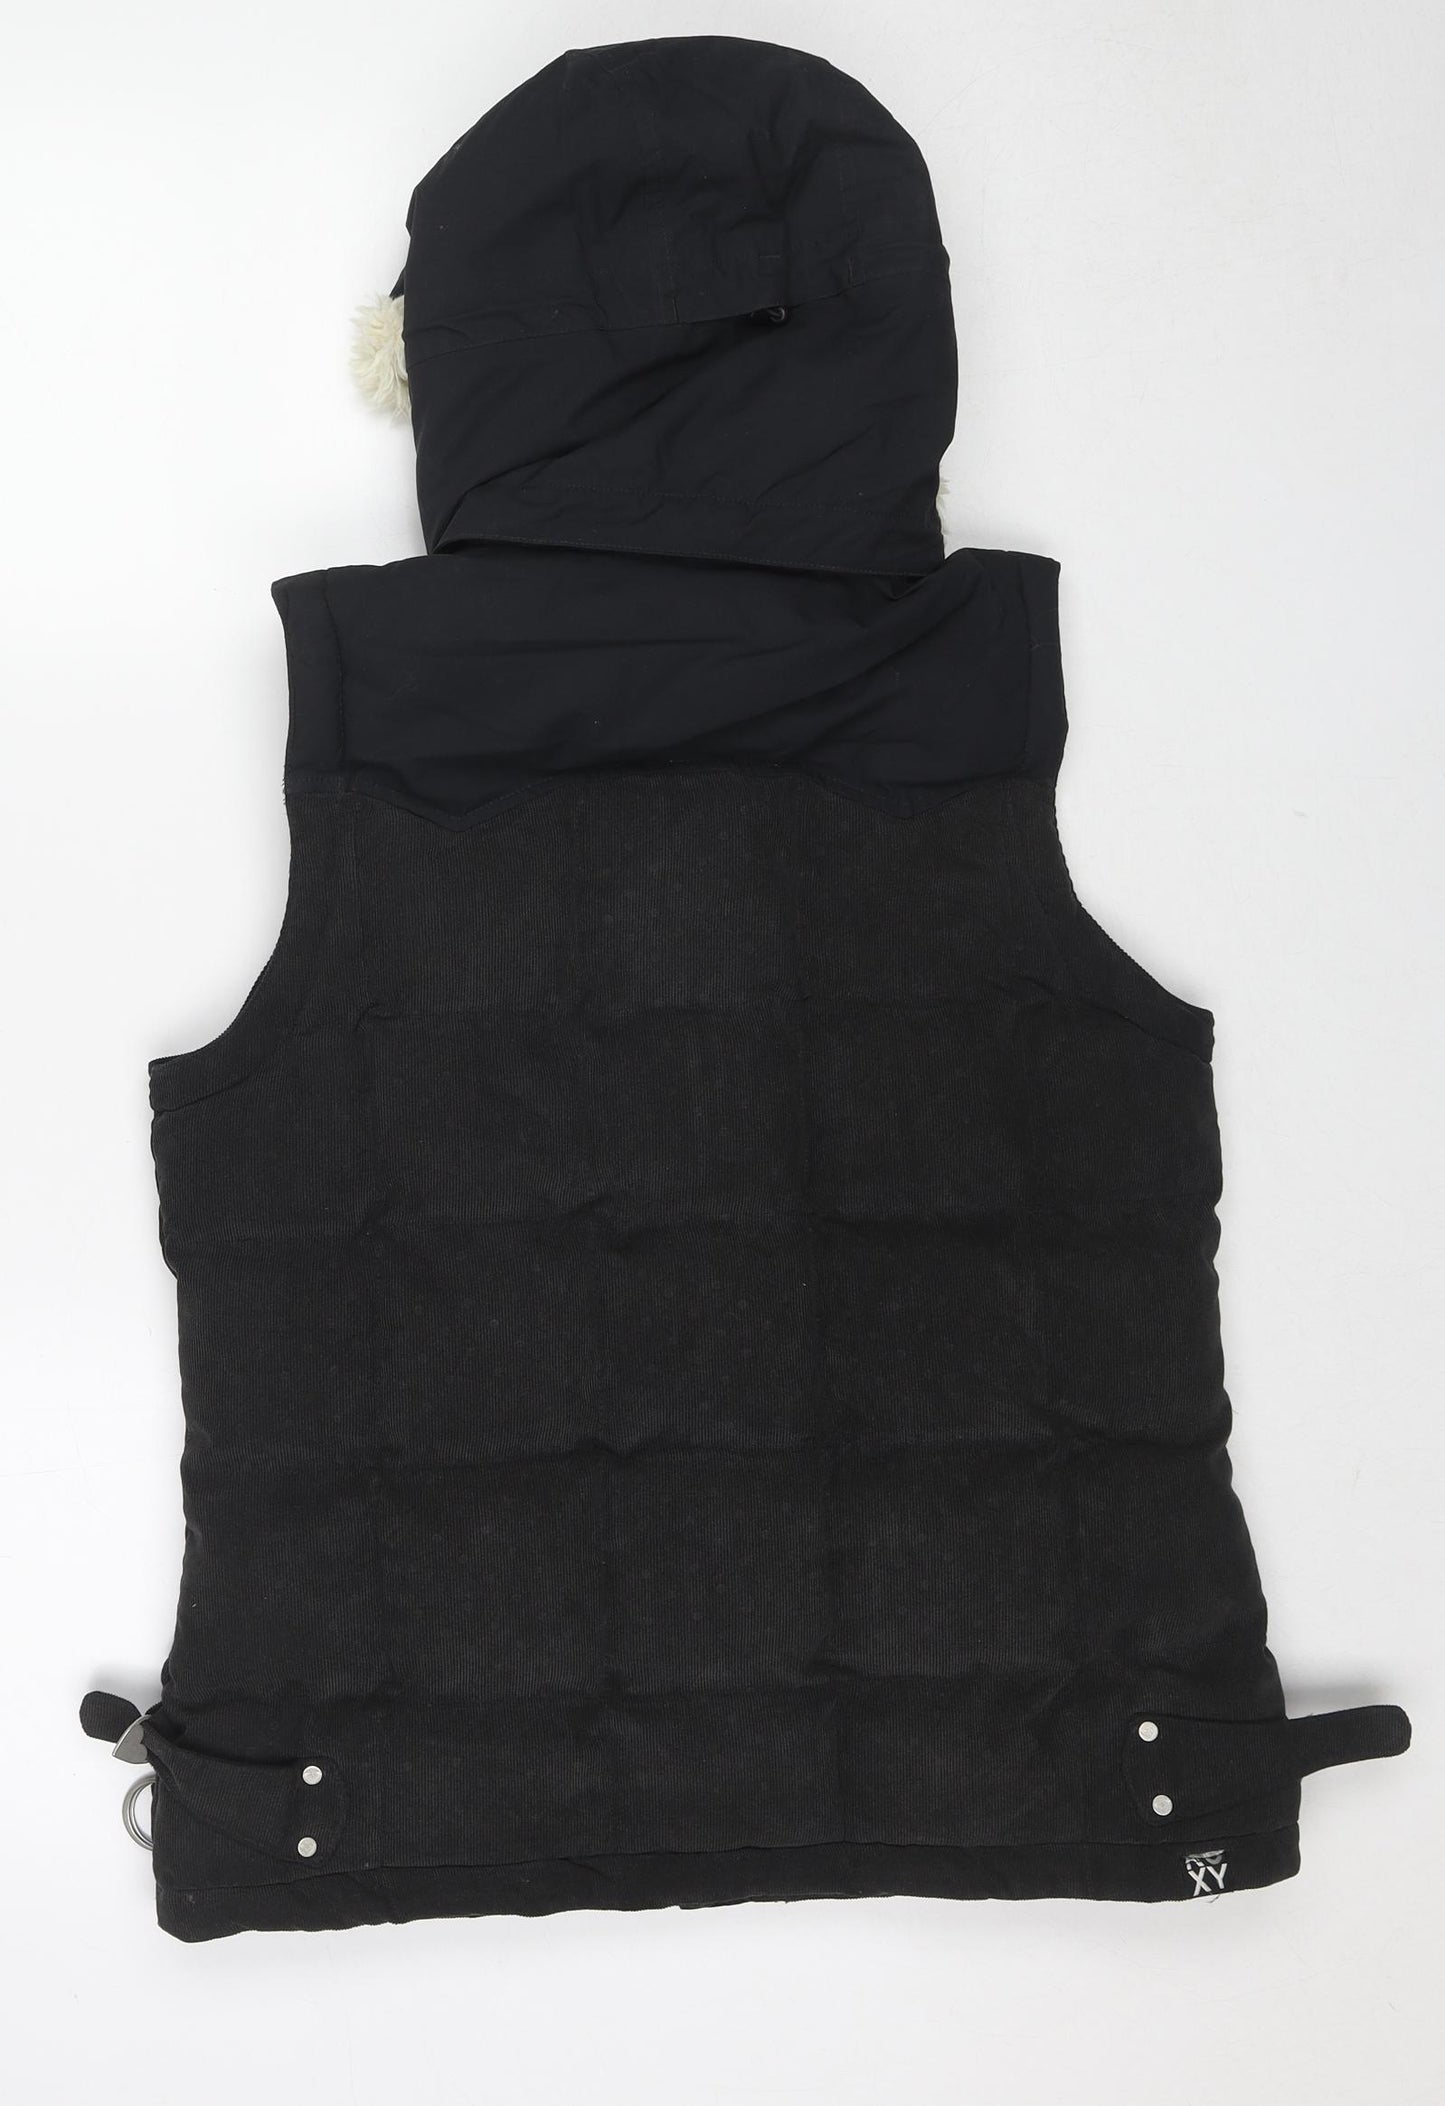 ROXY Womens Black Gilet Jacket Size M Zip